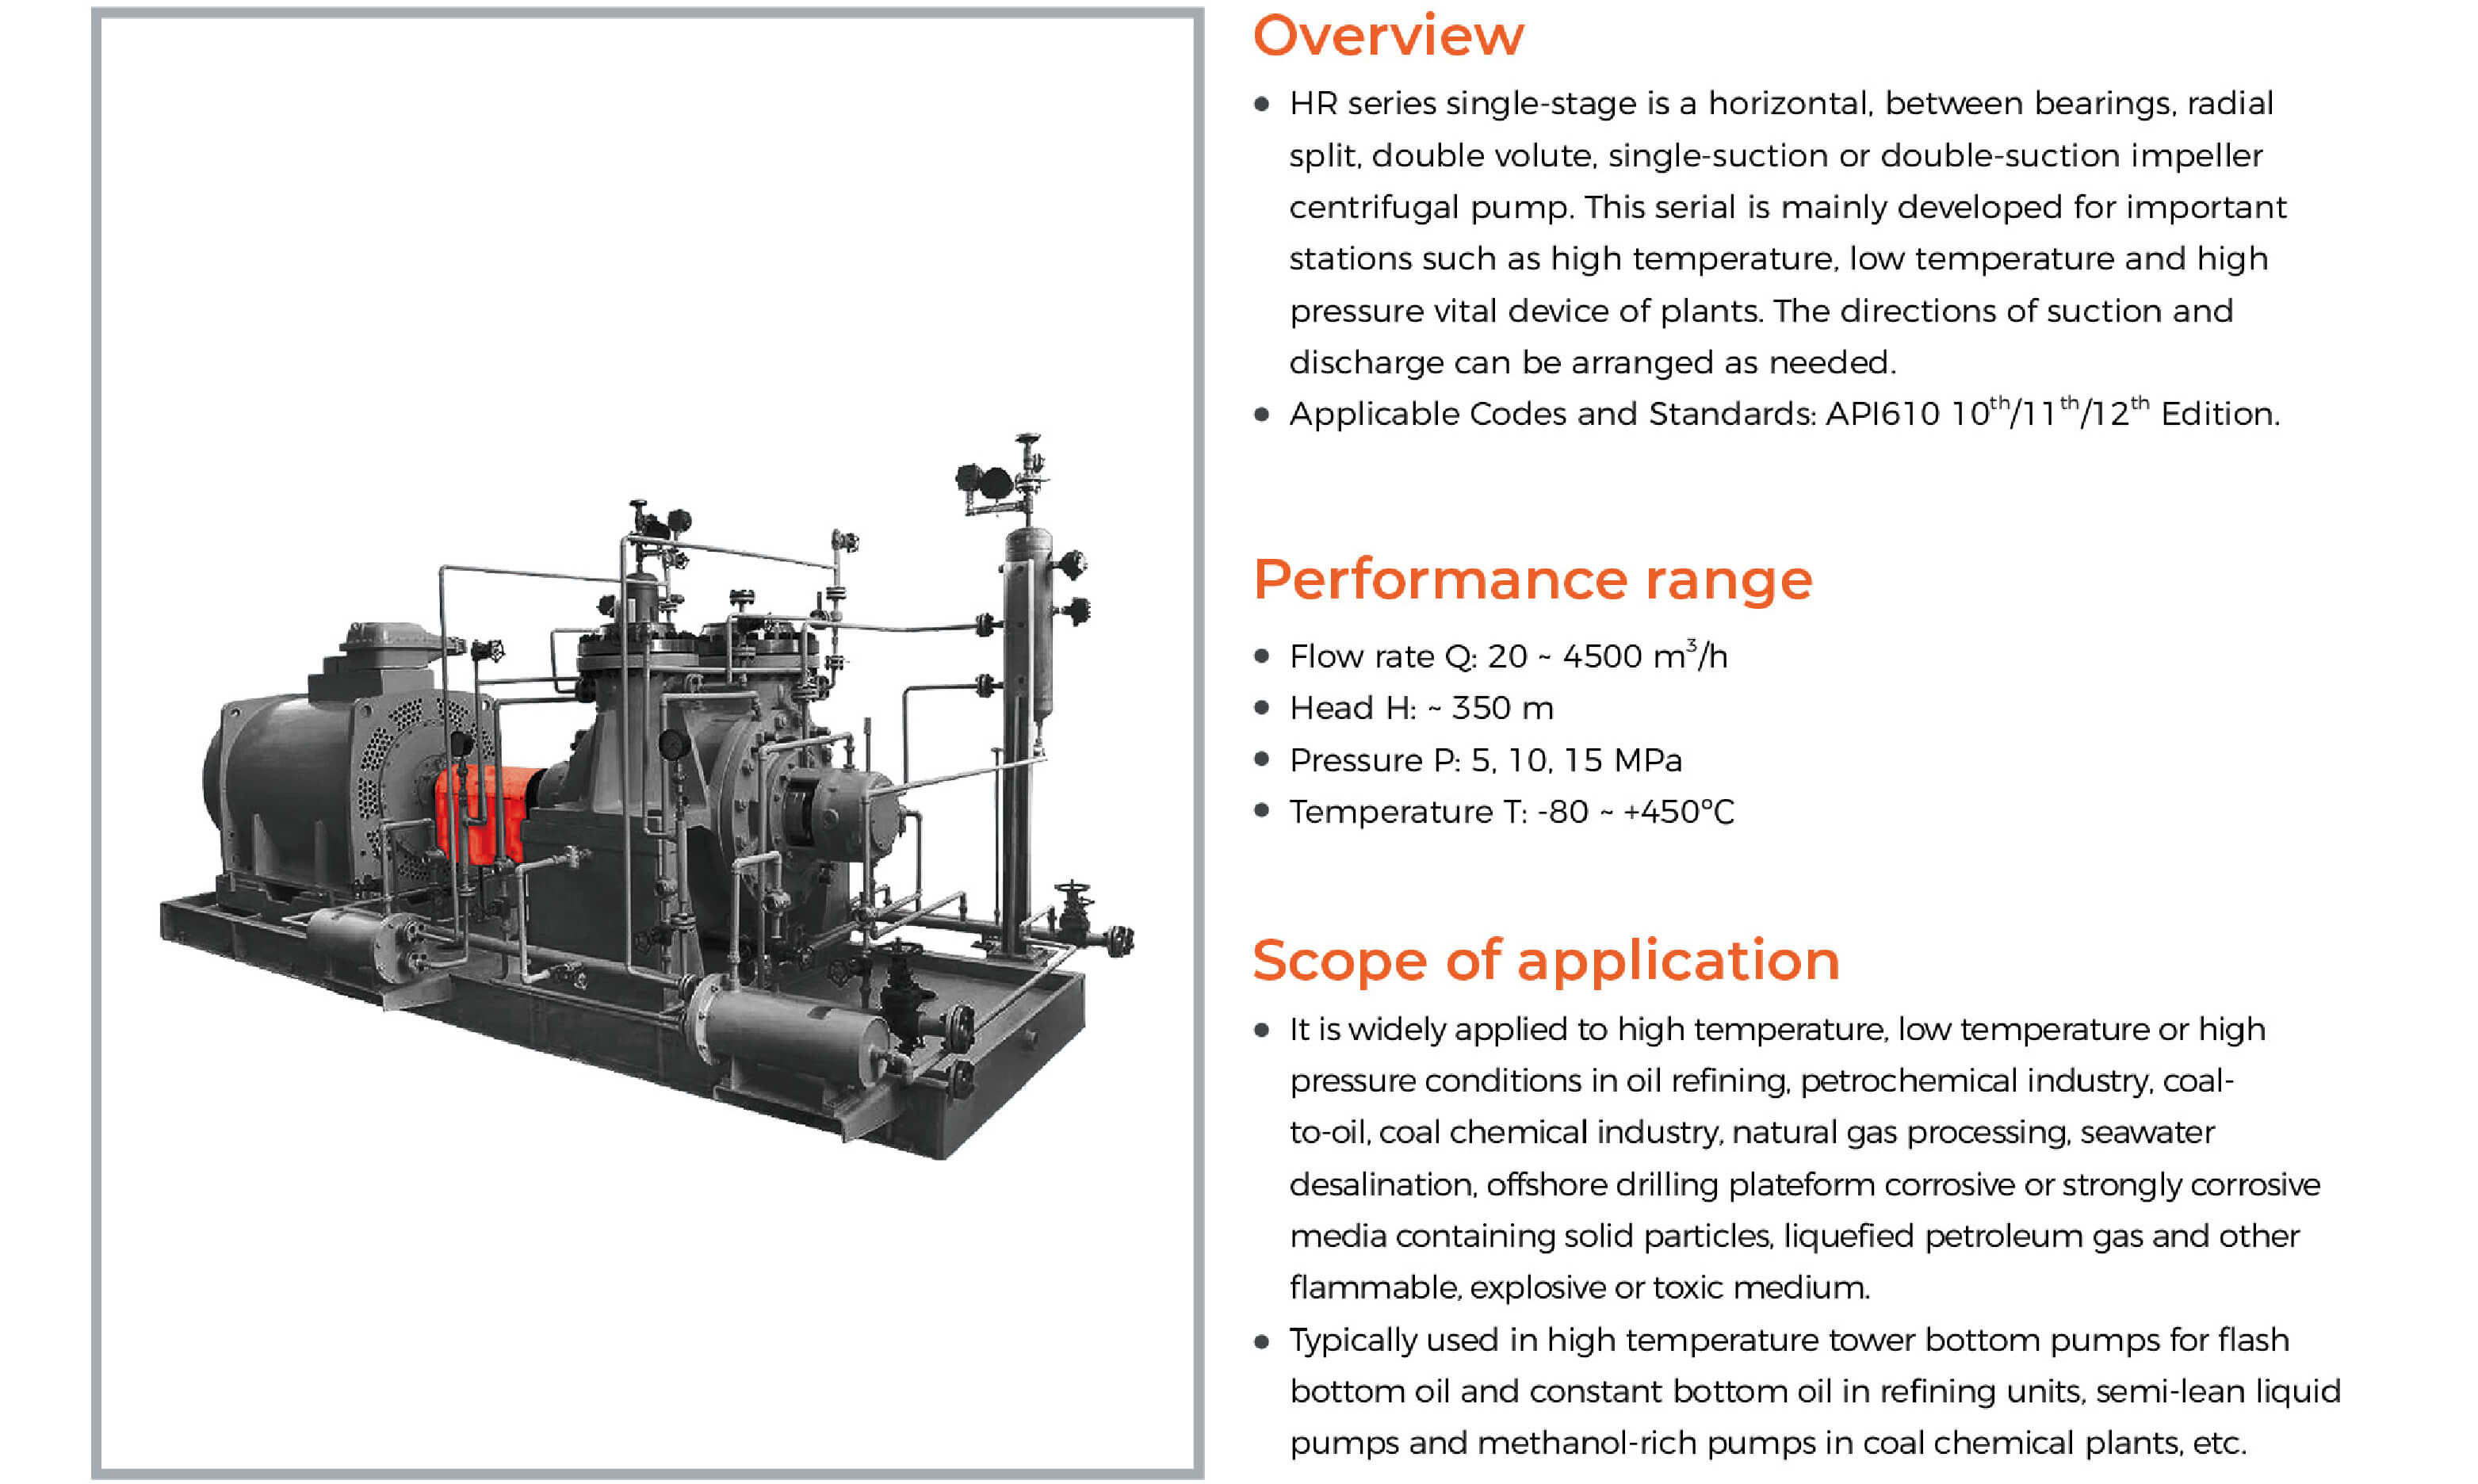 HR Heavy Duty Petrochemical Process Pump Features